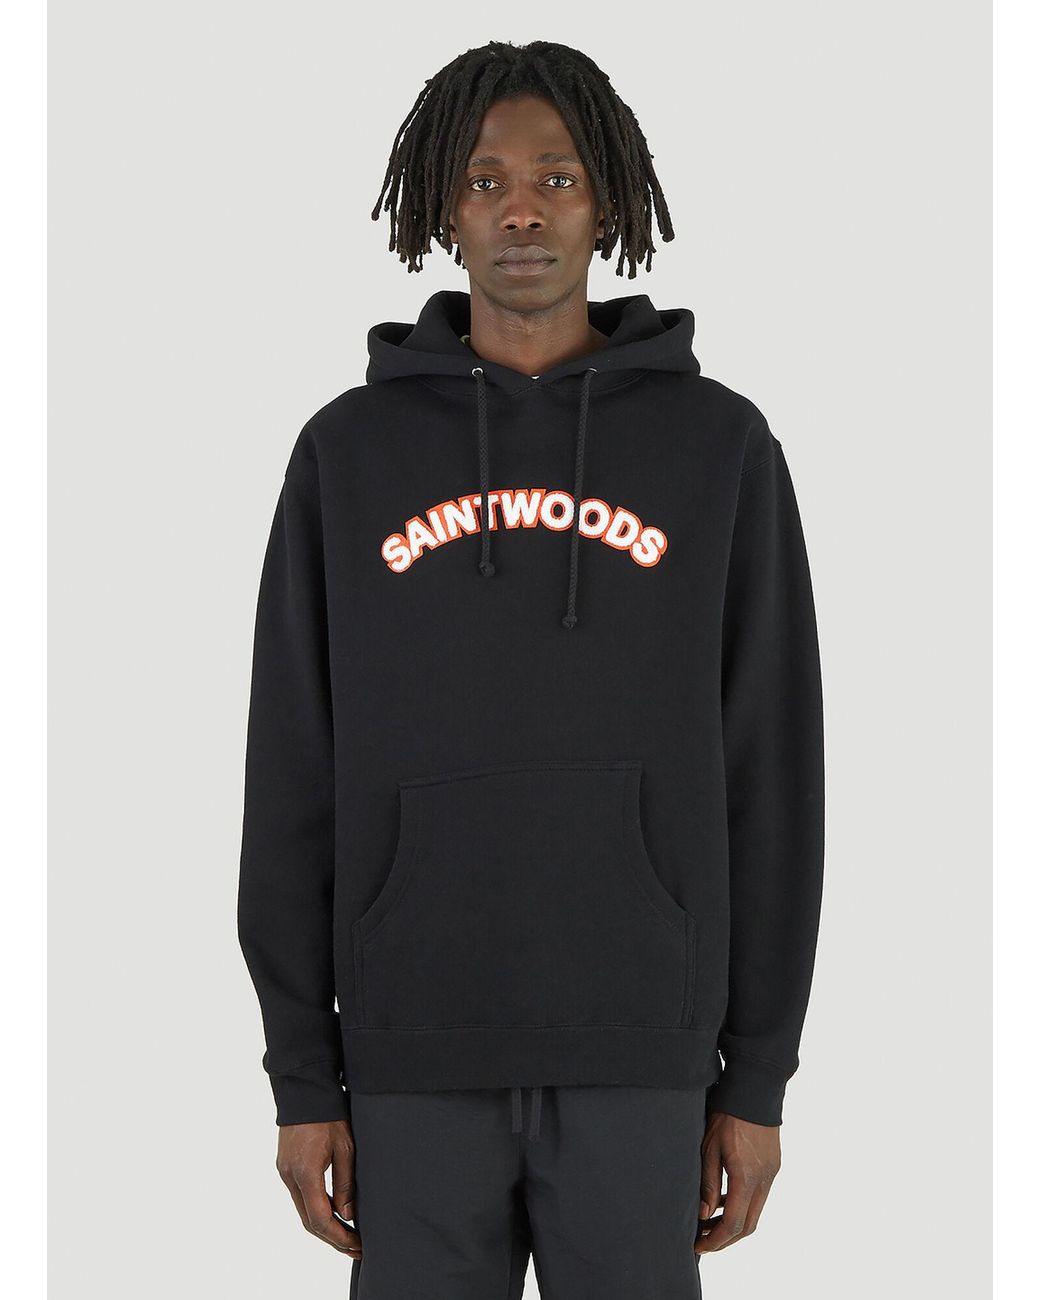 SAINTWOODS Logo Hooded Sweatshirt in Black for Men | Lyst